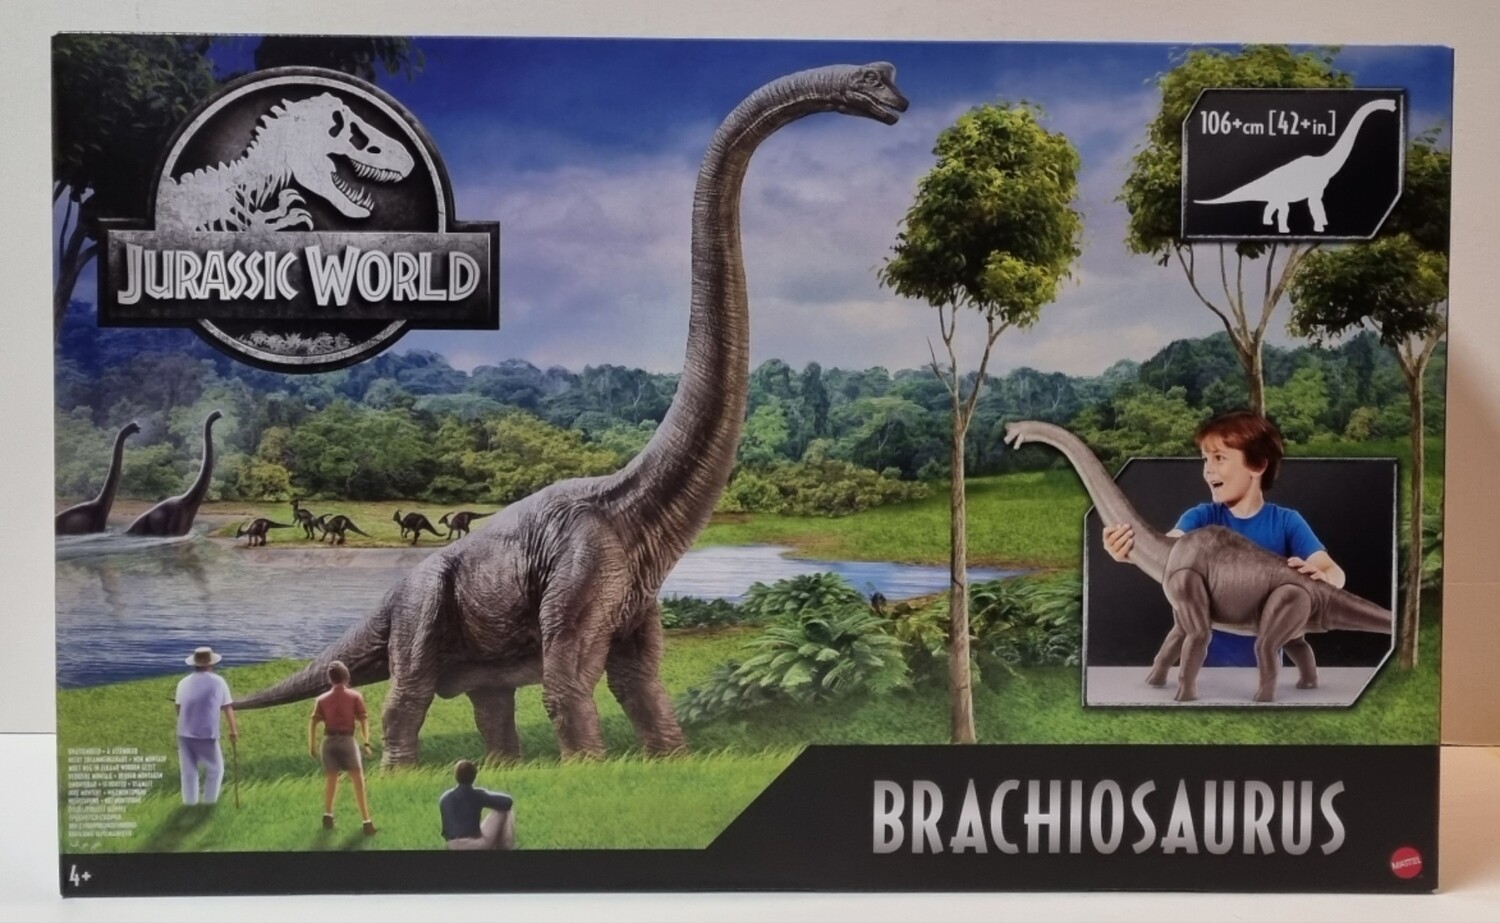 Actiefiguur, Brachiosaurus, Jarassic World